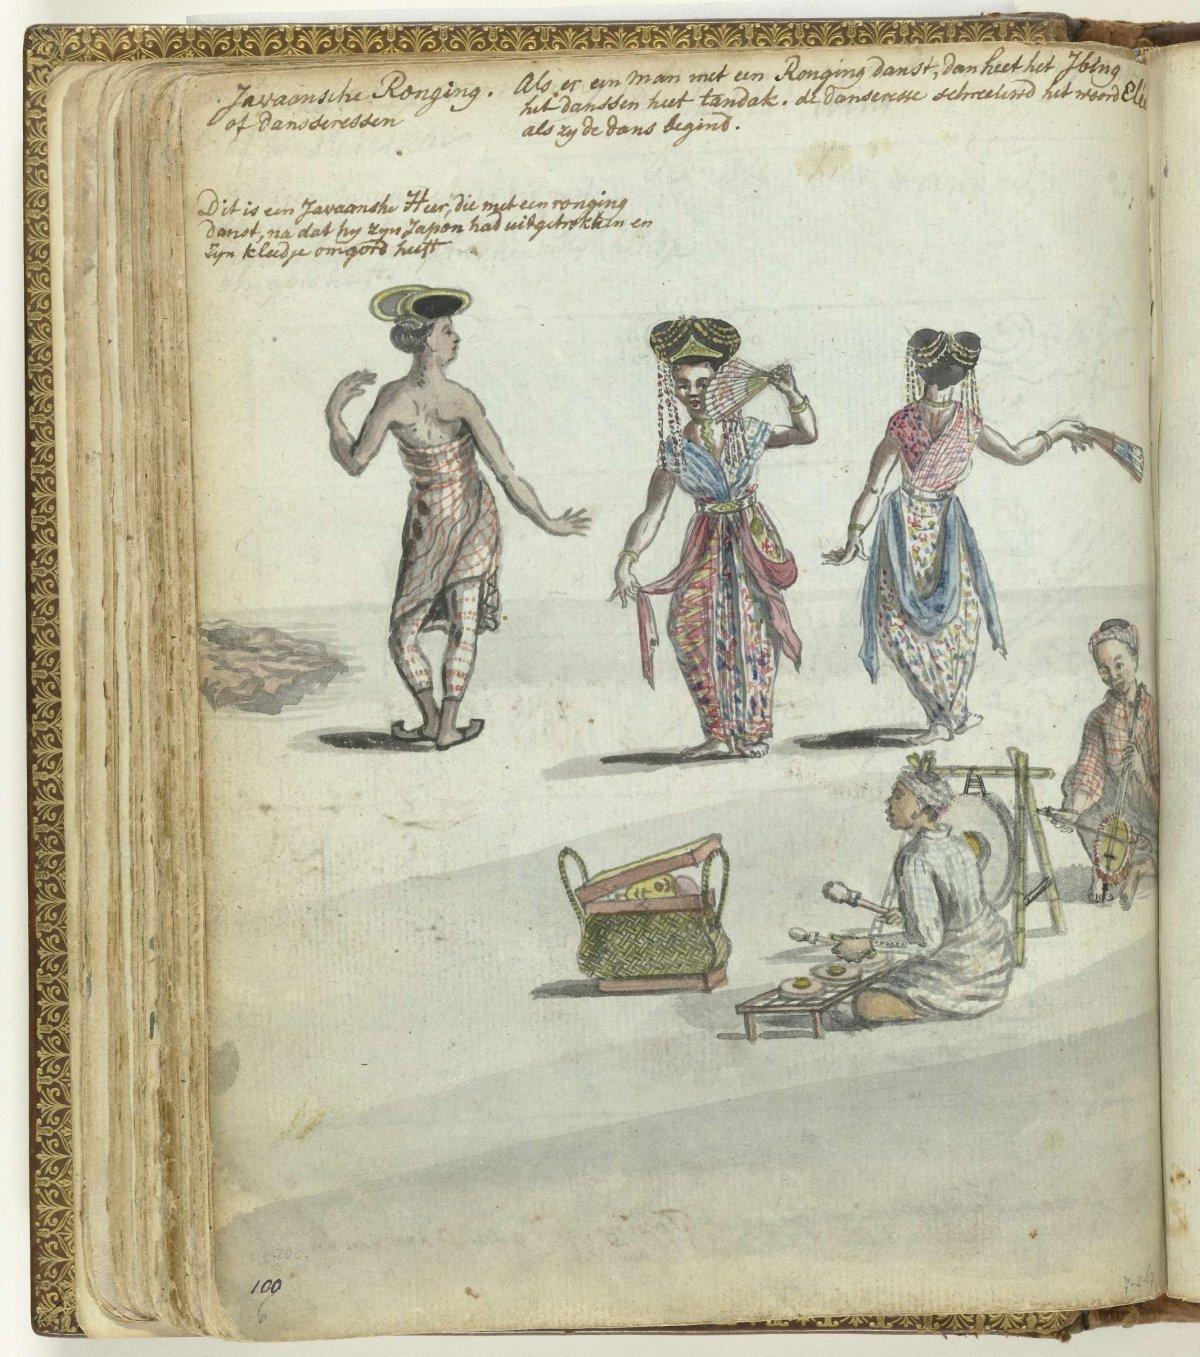 Javaanse ronging of danseressen, Jan Brandes, 1779 - 1785